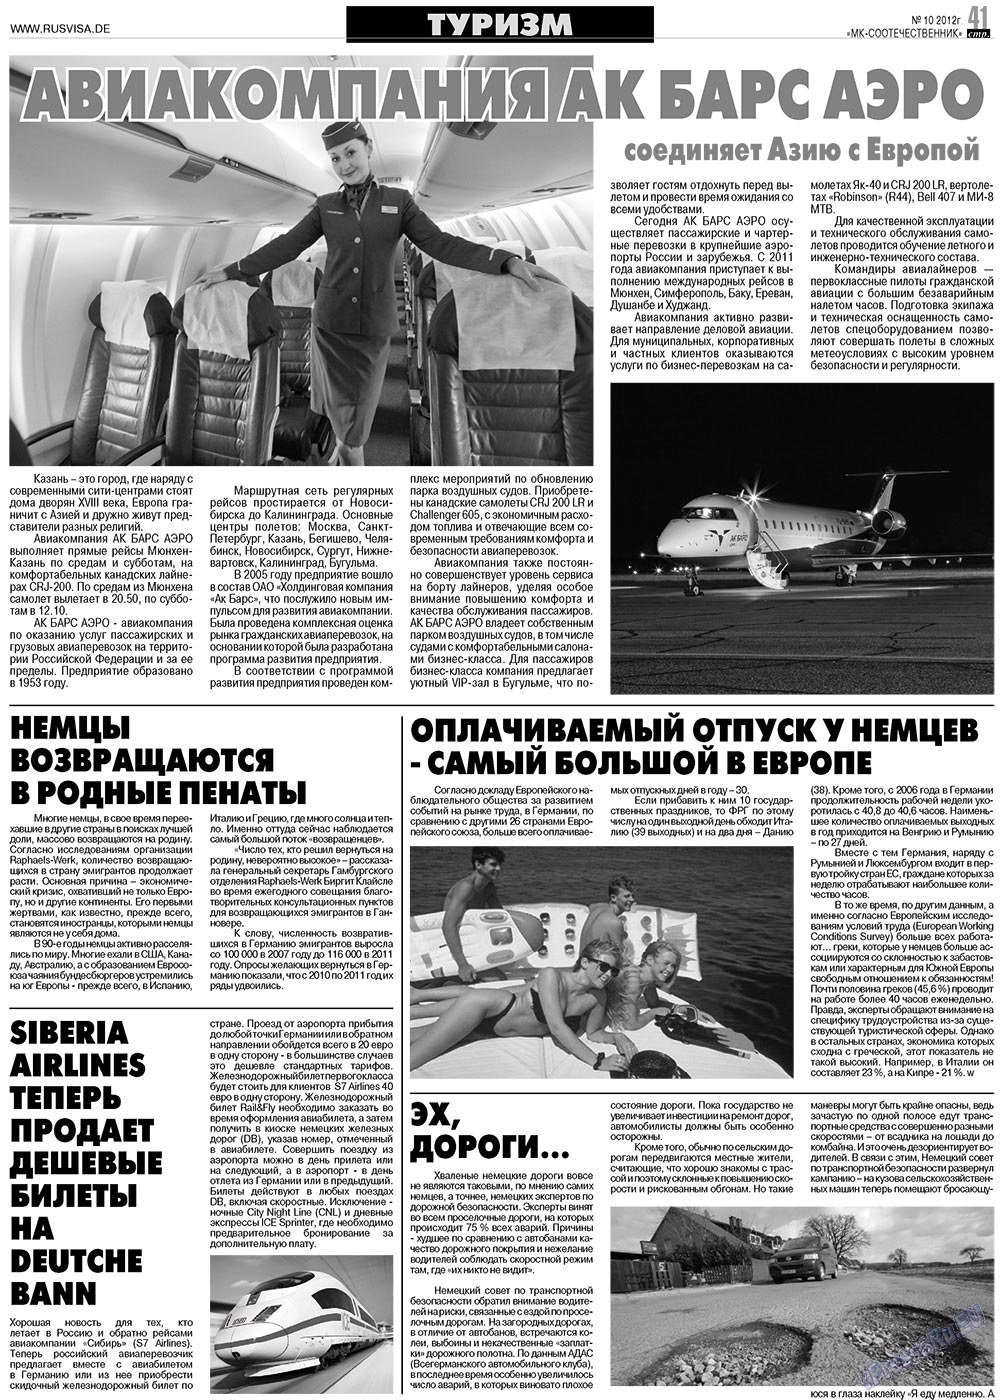 МК-Германия планета мнений, газета. 2012 №10 стр.41